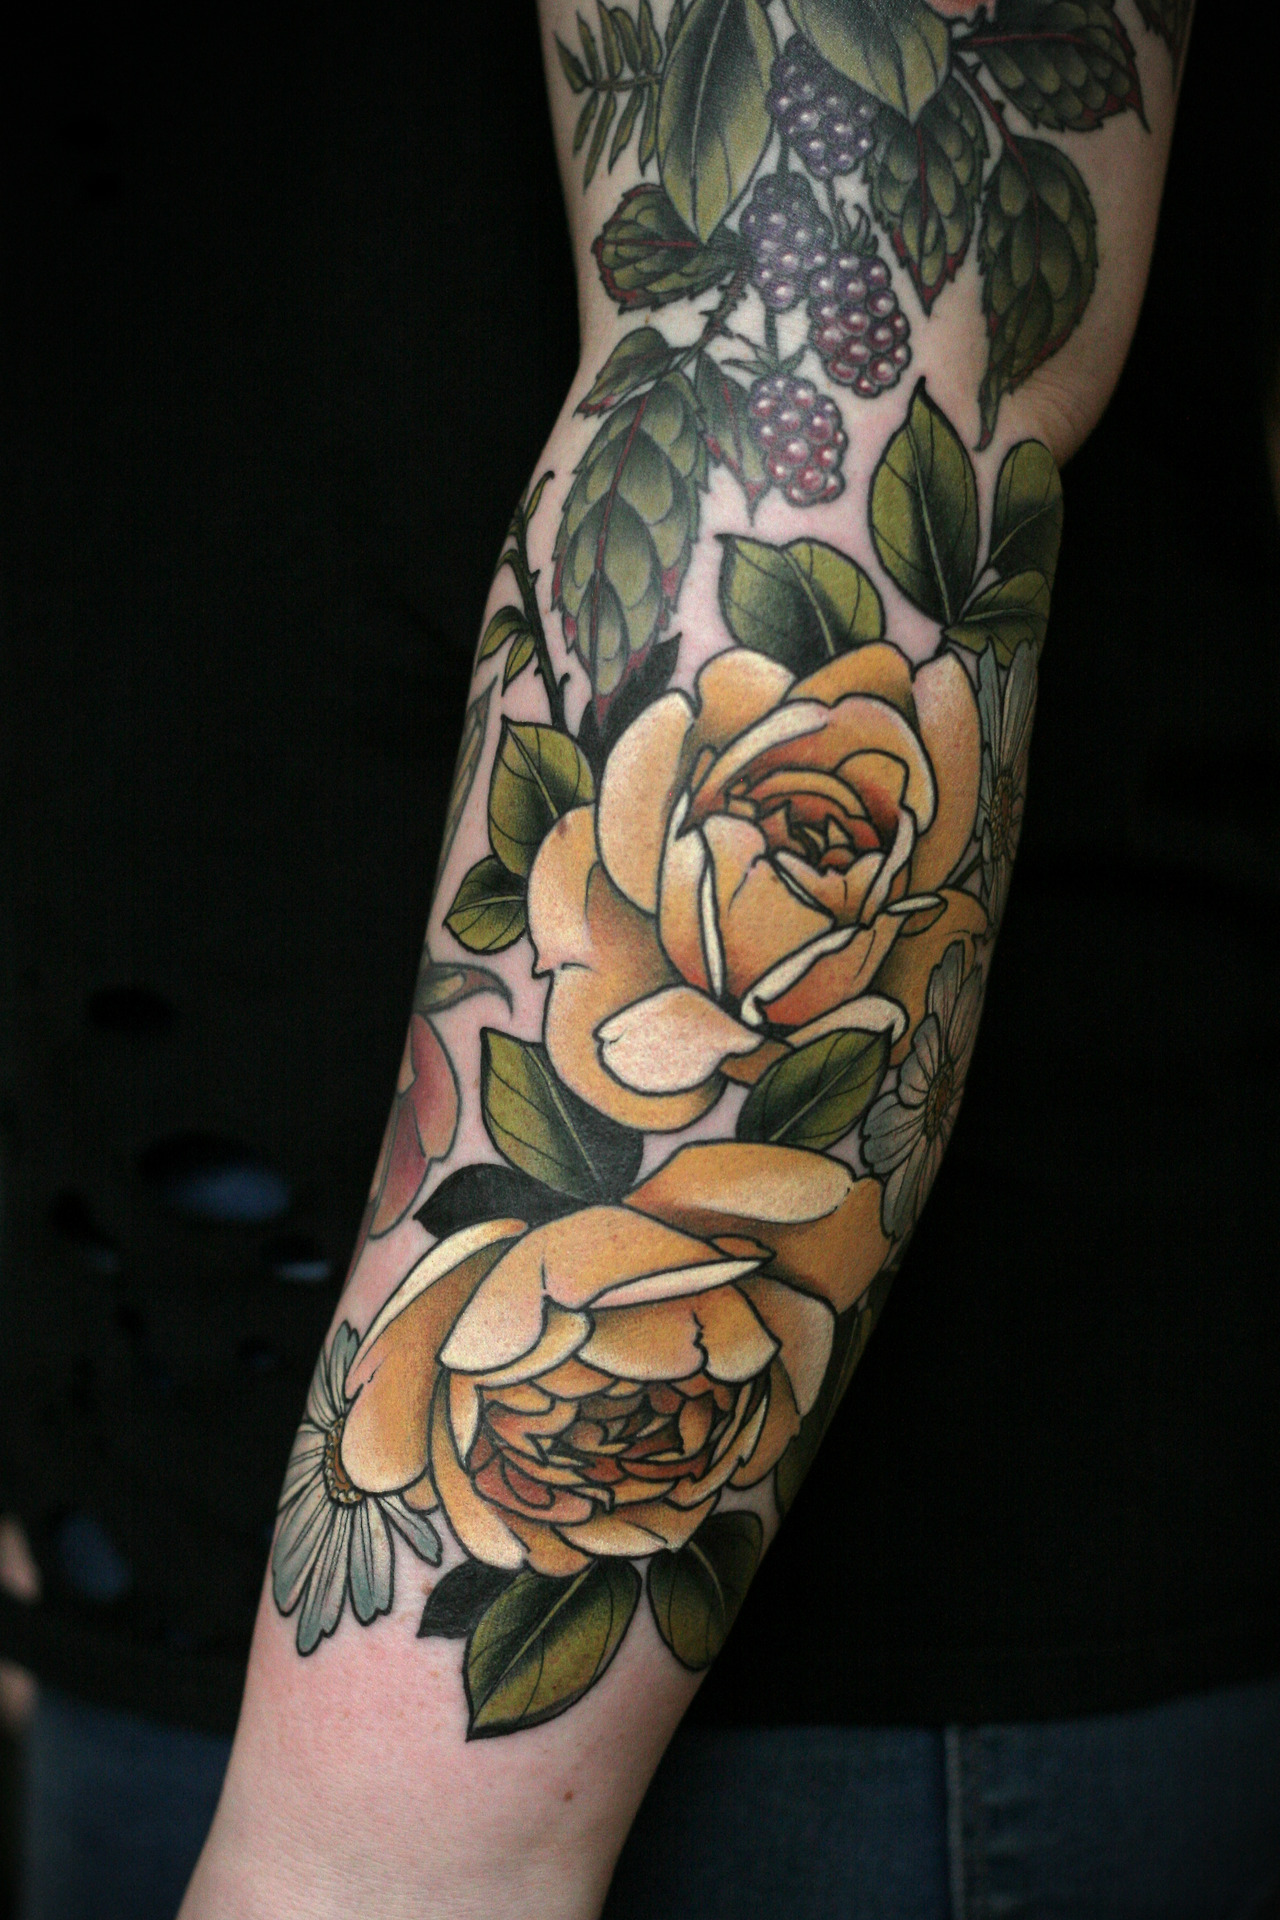 kirsten makes tattoos - Tumblr Blog Gallery